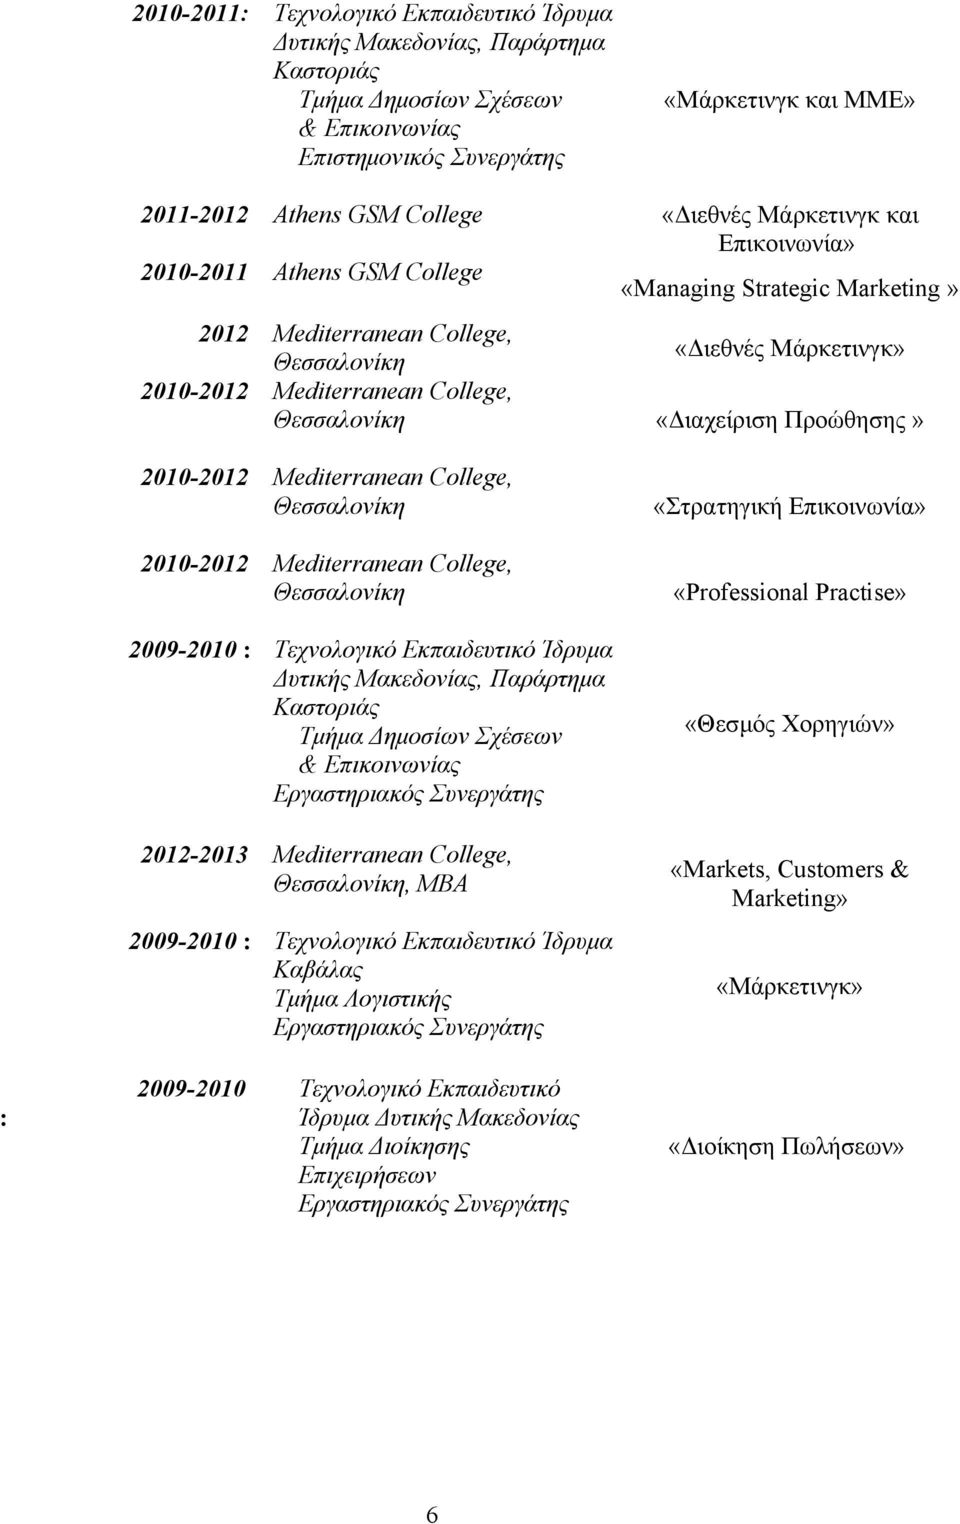 2010-2012 Mediterranean College, Θεσσαλονίκη 2009-2010 : Τεχνολογικό Εκπαιδευτικό Ίδρυμα Τμήμα Δημοσίων Σχέσεων & Εργαστηριακός Συνεργάτης 2012-2013 Mediterranean College, Θεσσαλονίκη, MBA 2009-2010